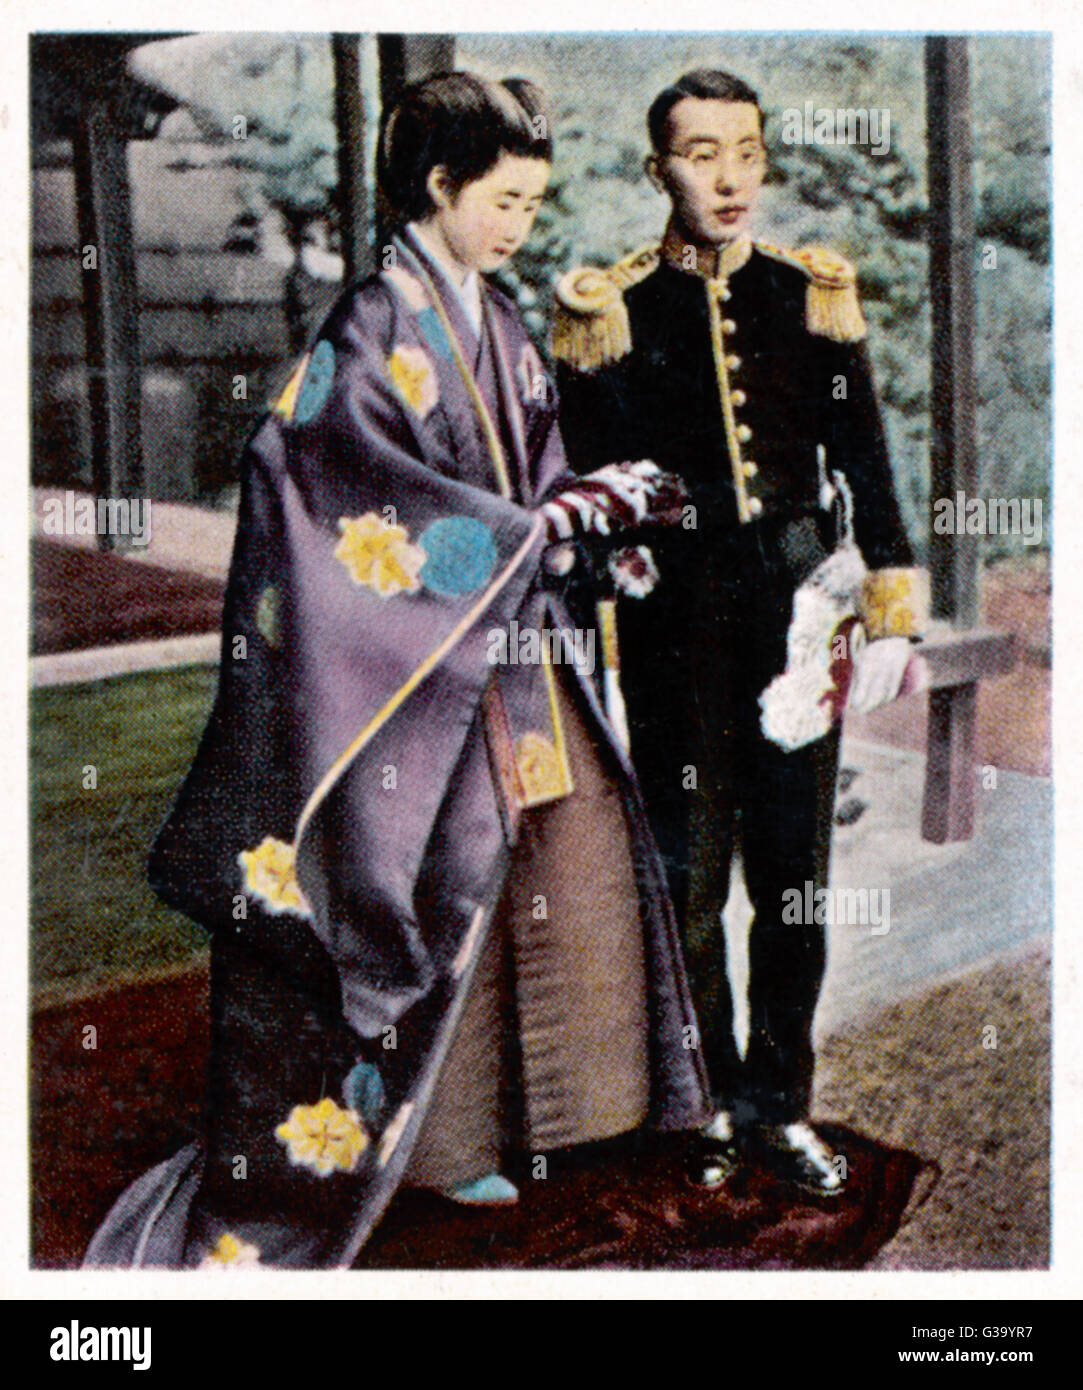 El emperador Hirohito entronizados. Fecha: 28 de diciembre de 1926 Foto de stock